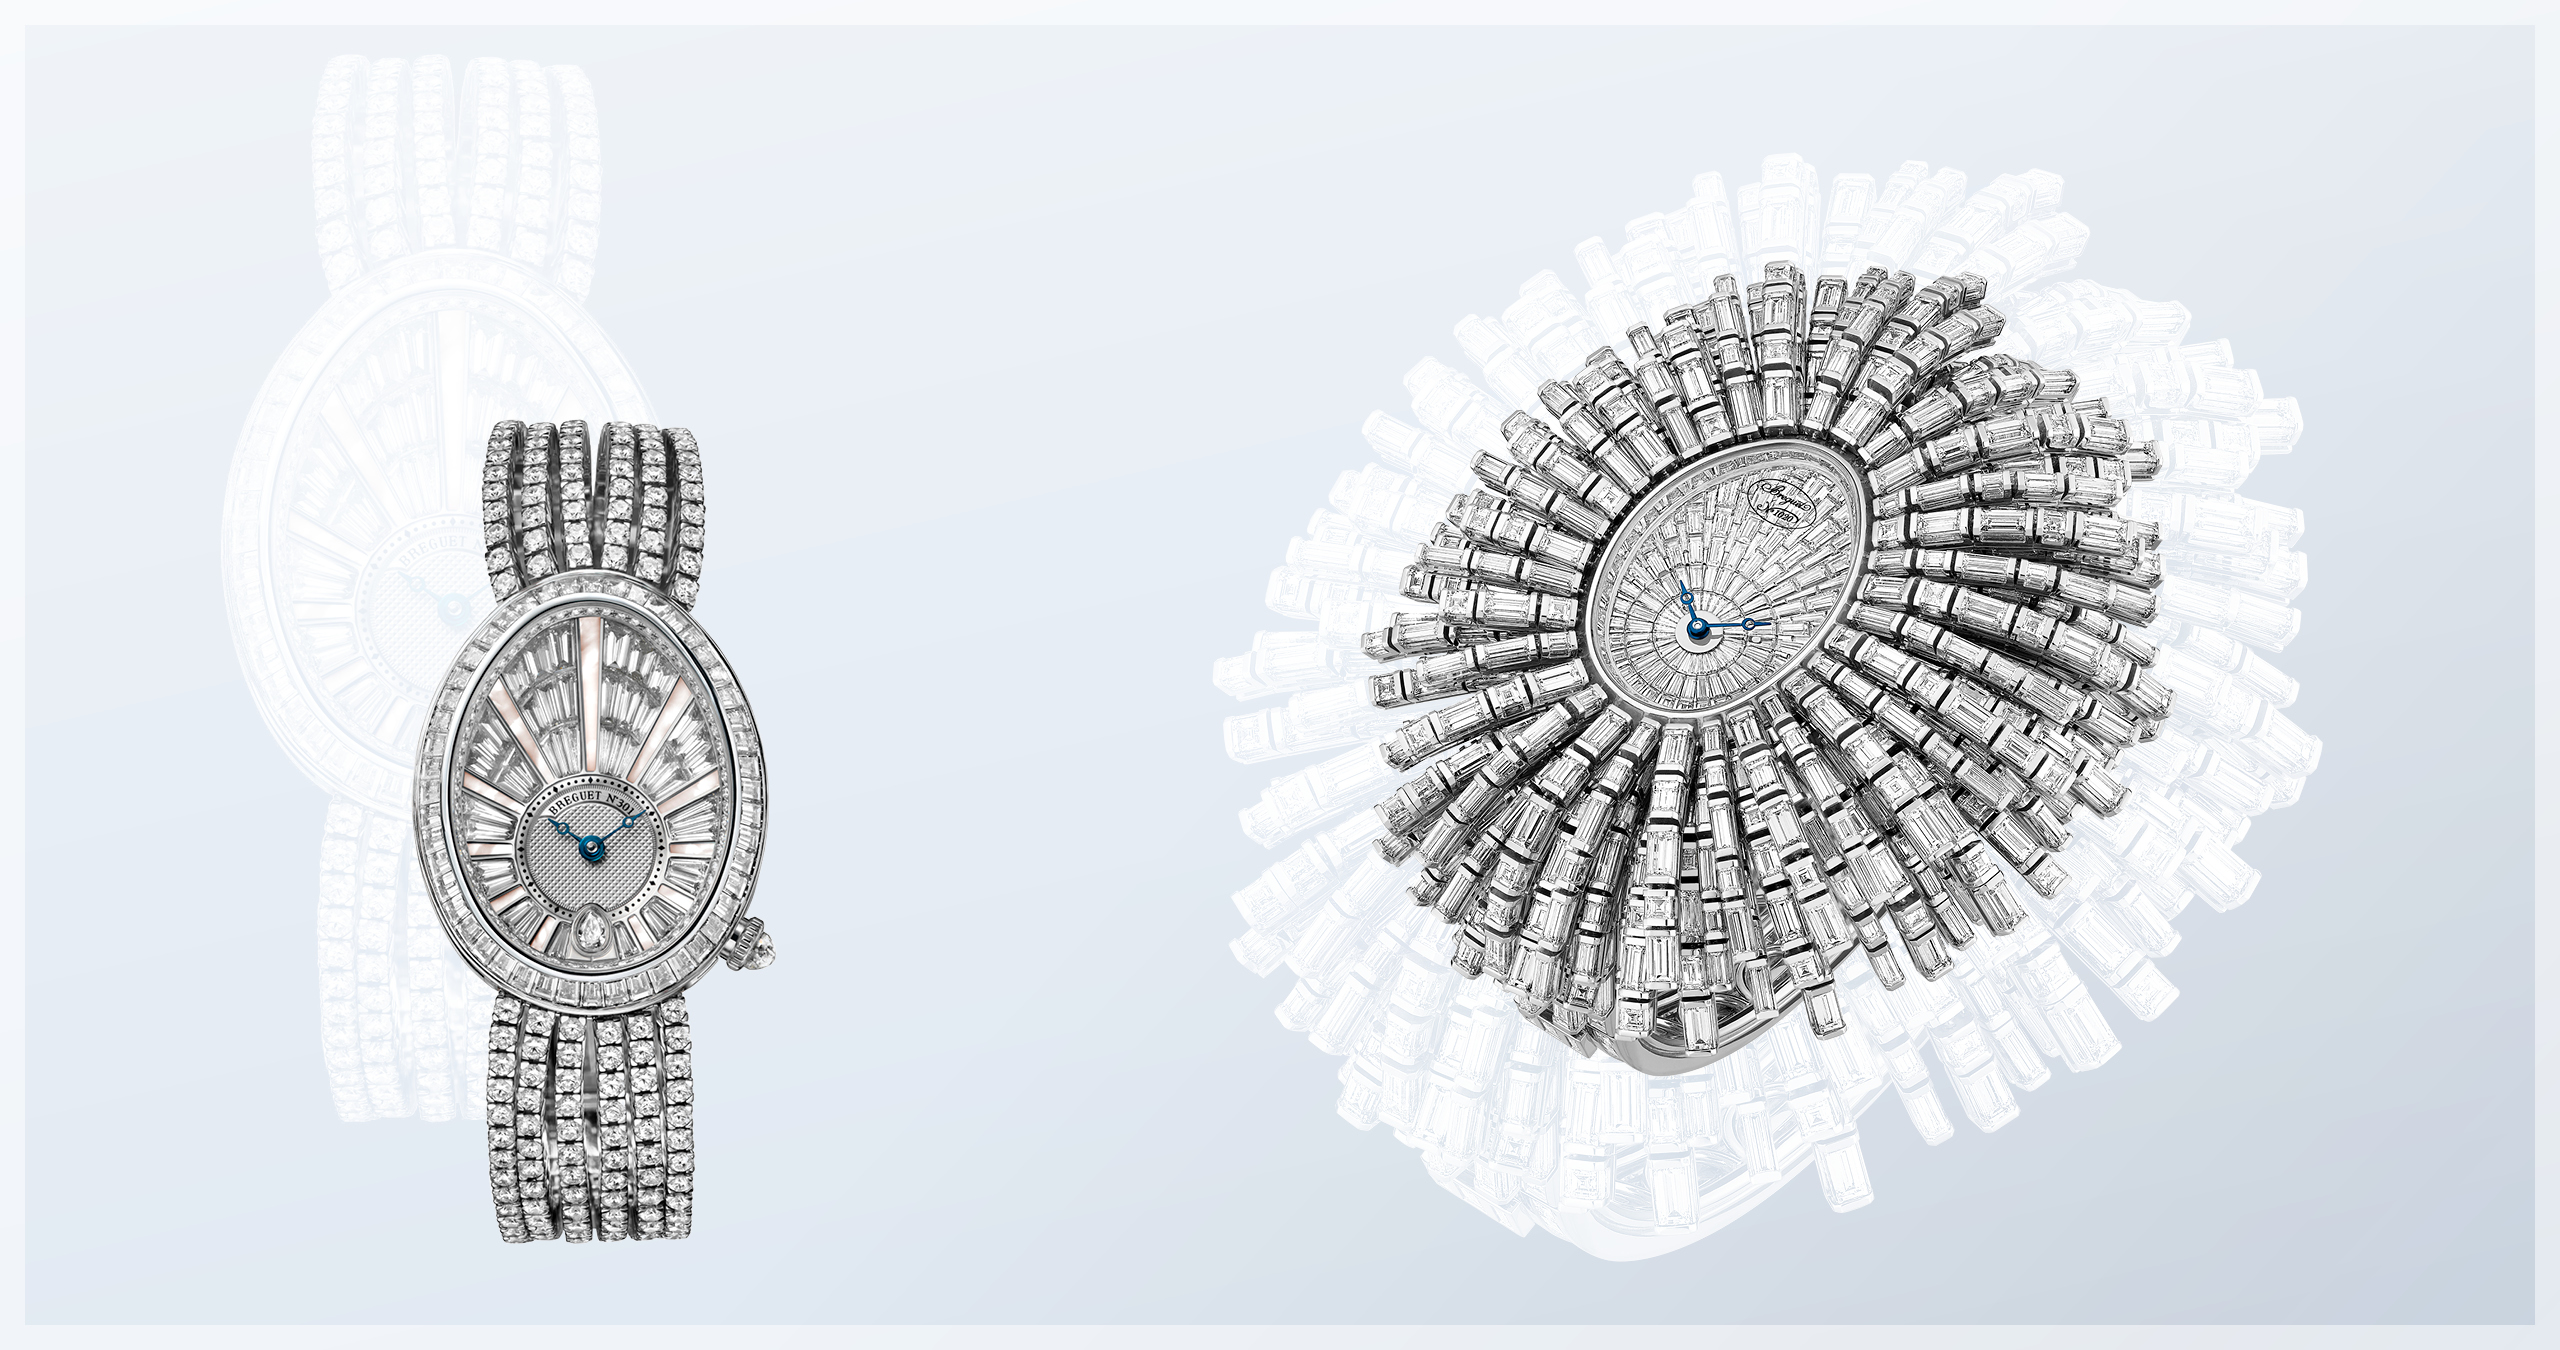 Hublot Chain Watch - Royal Bloom Jewelries